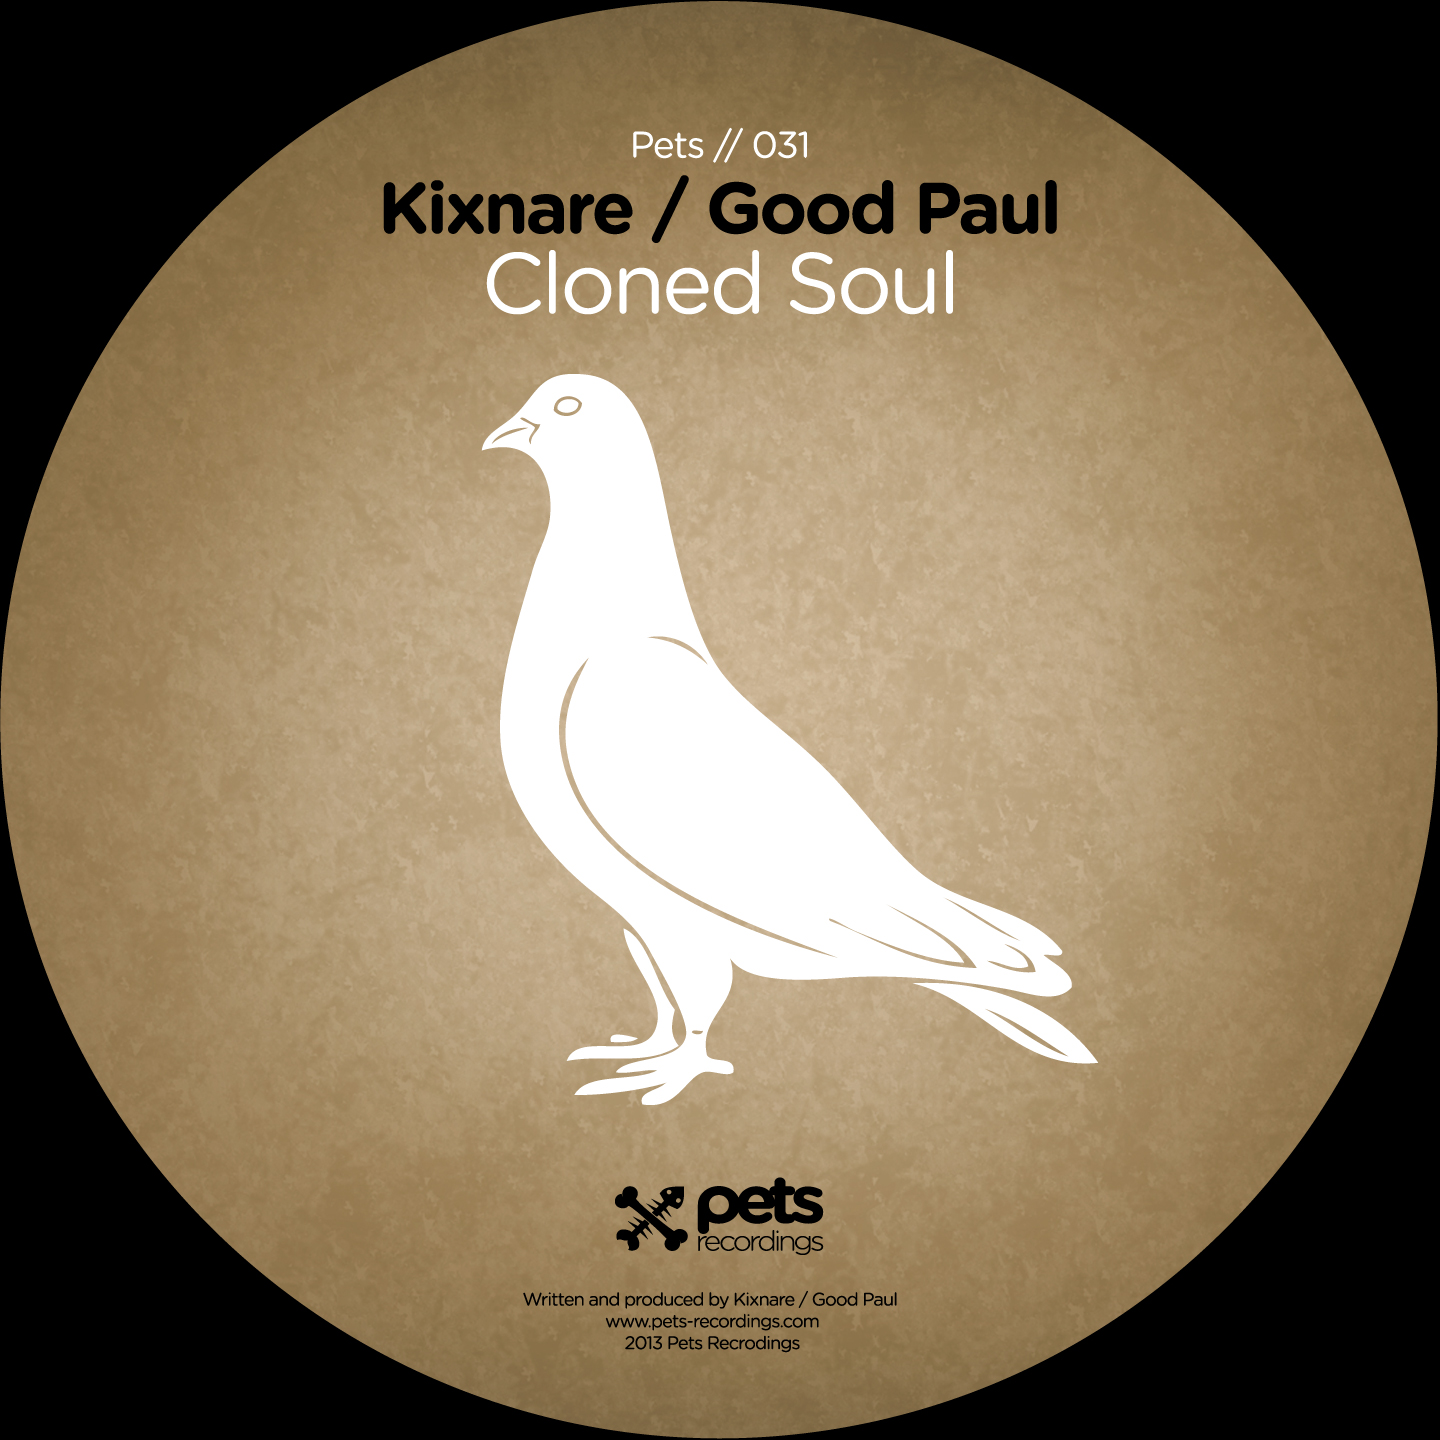 Kixnare / Good Paul - Cloned Soul EP [PETS031]